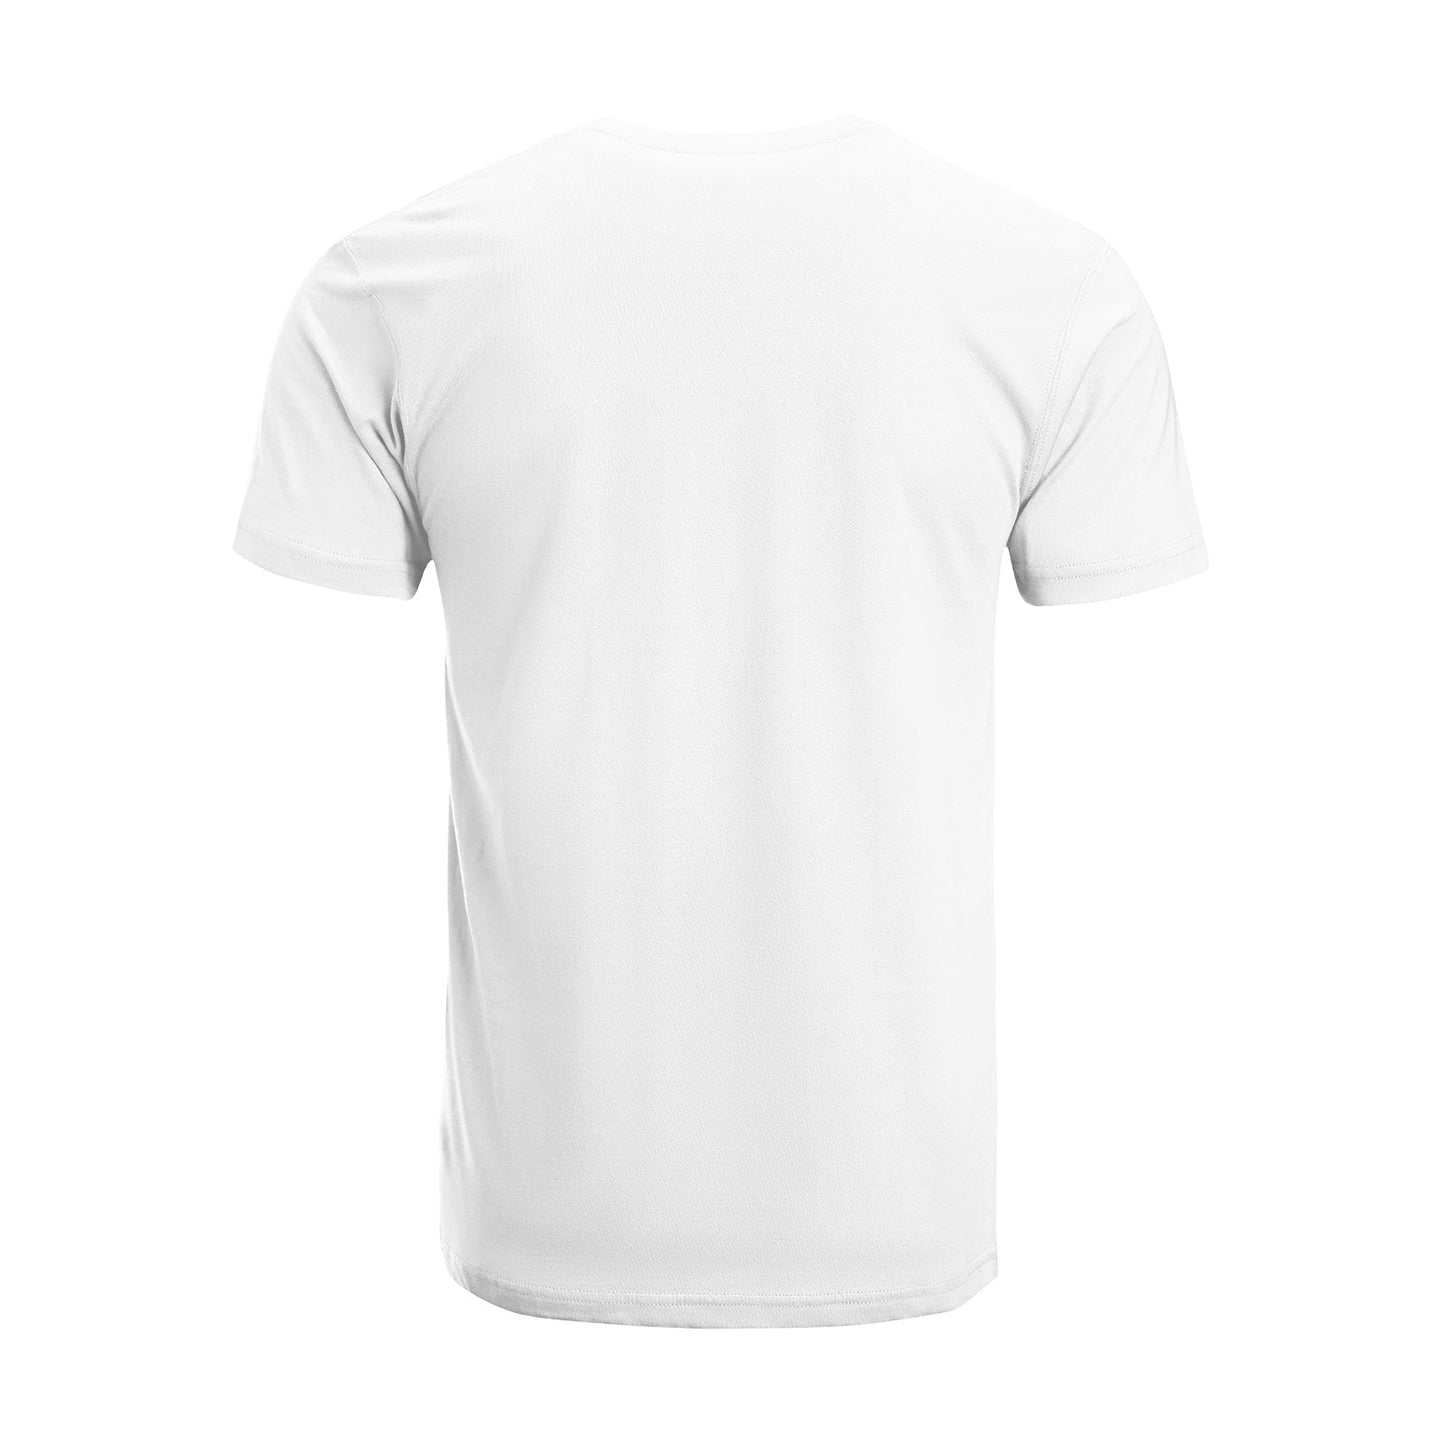 Unisex Short Sleeve Crew Neck Cotton Jersey T-Shirt CAT 04 - Tara-Outfits.com